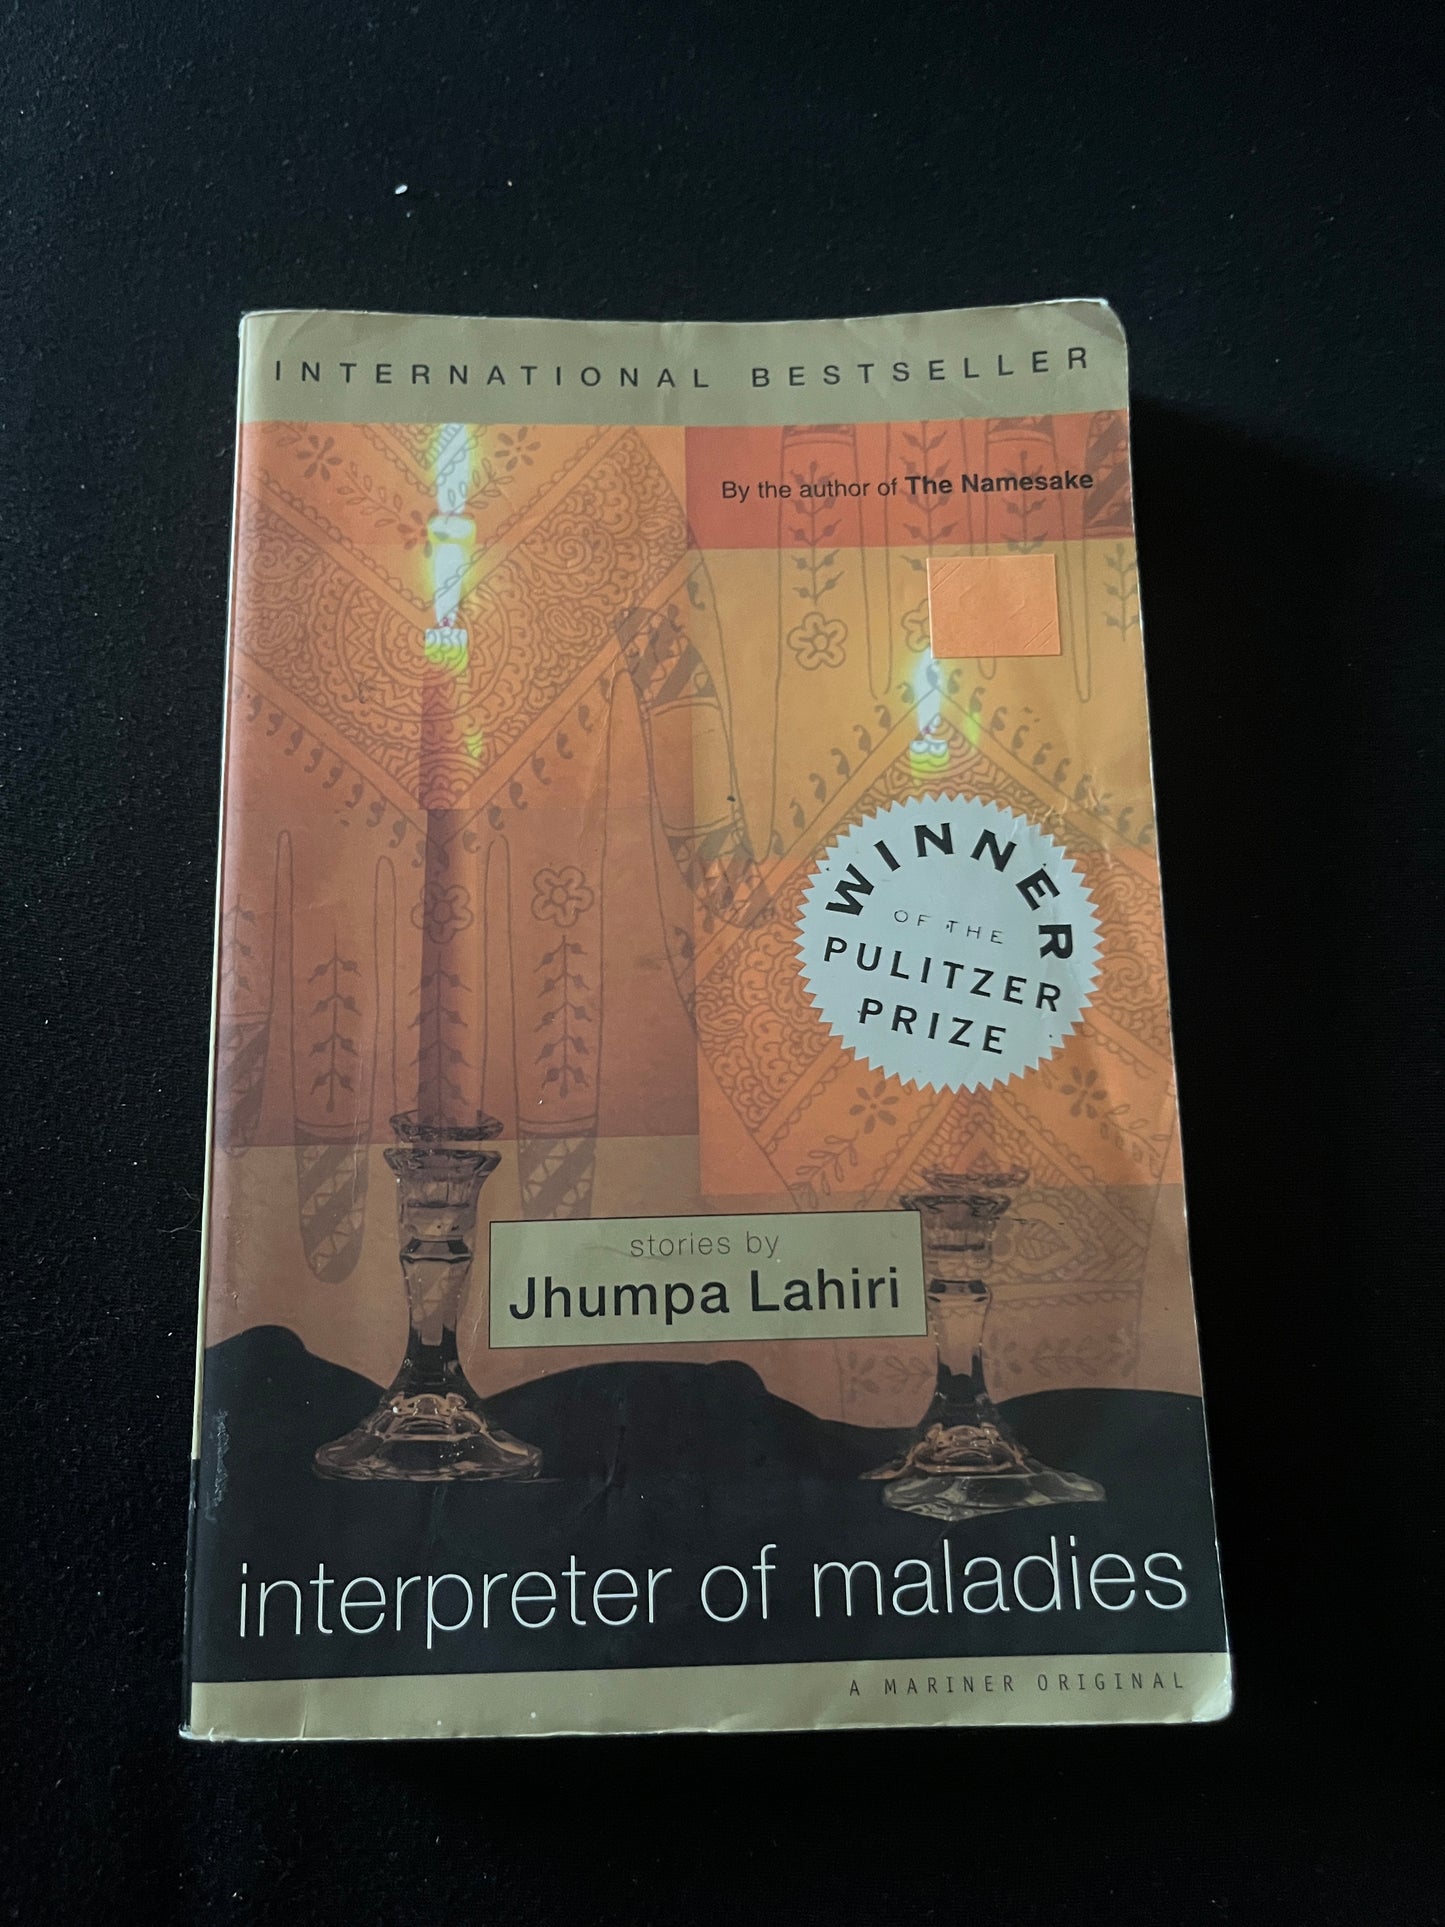 INTERPERTER OF MALADIES by Jhumpa Lahiri